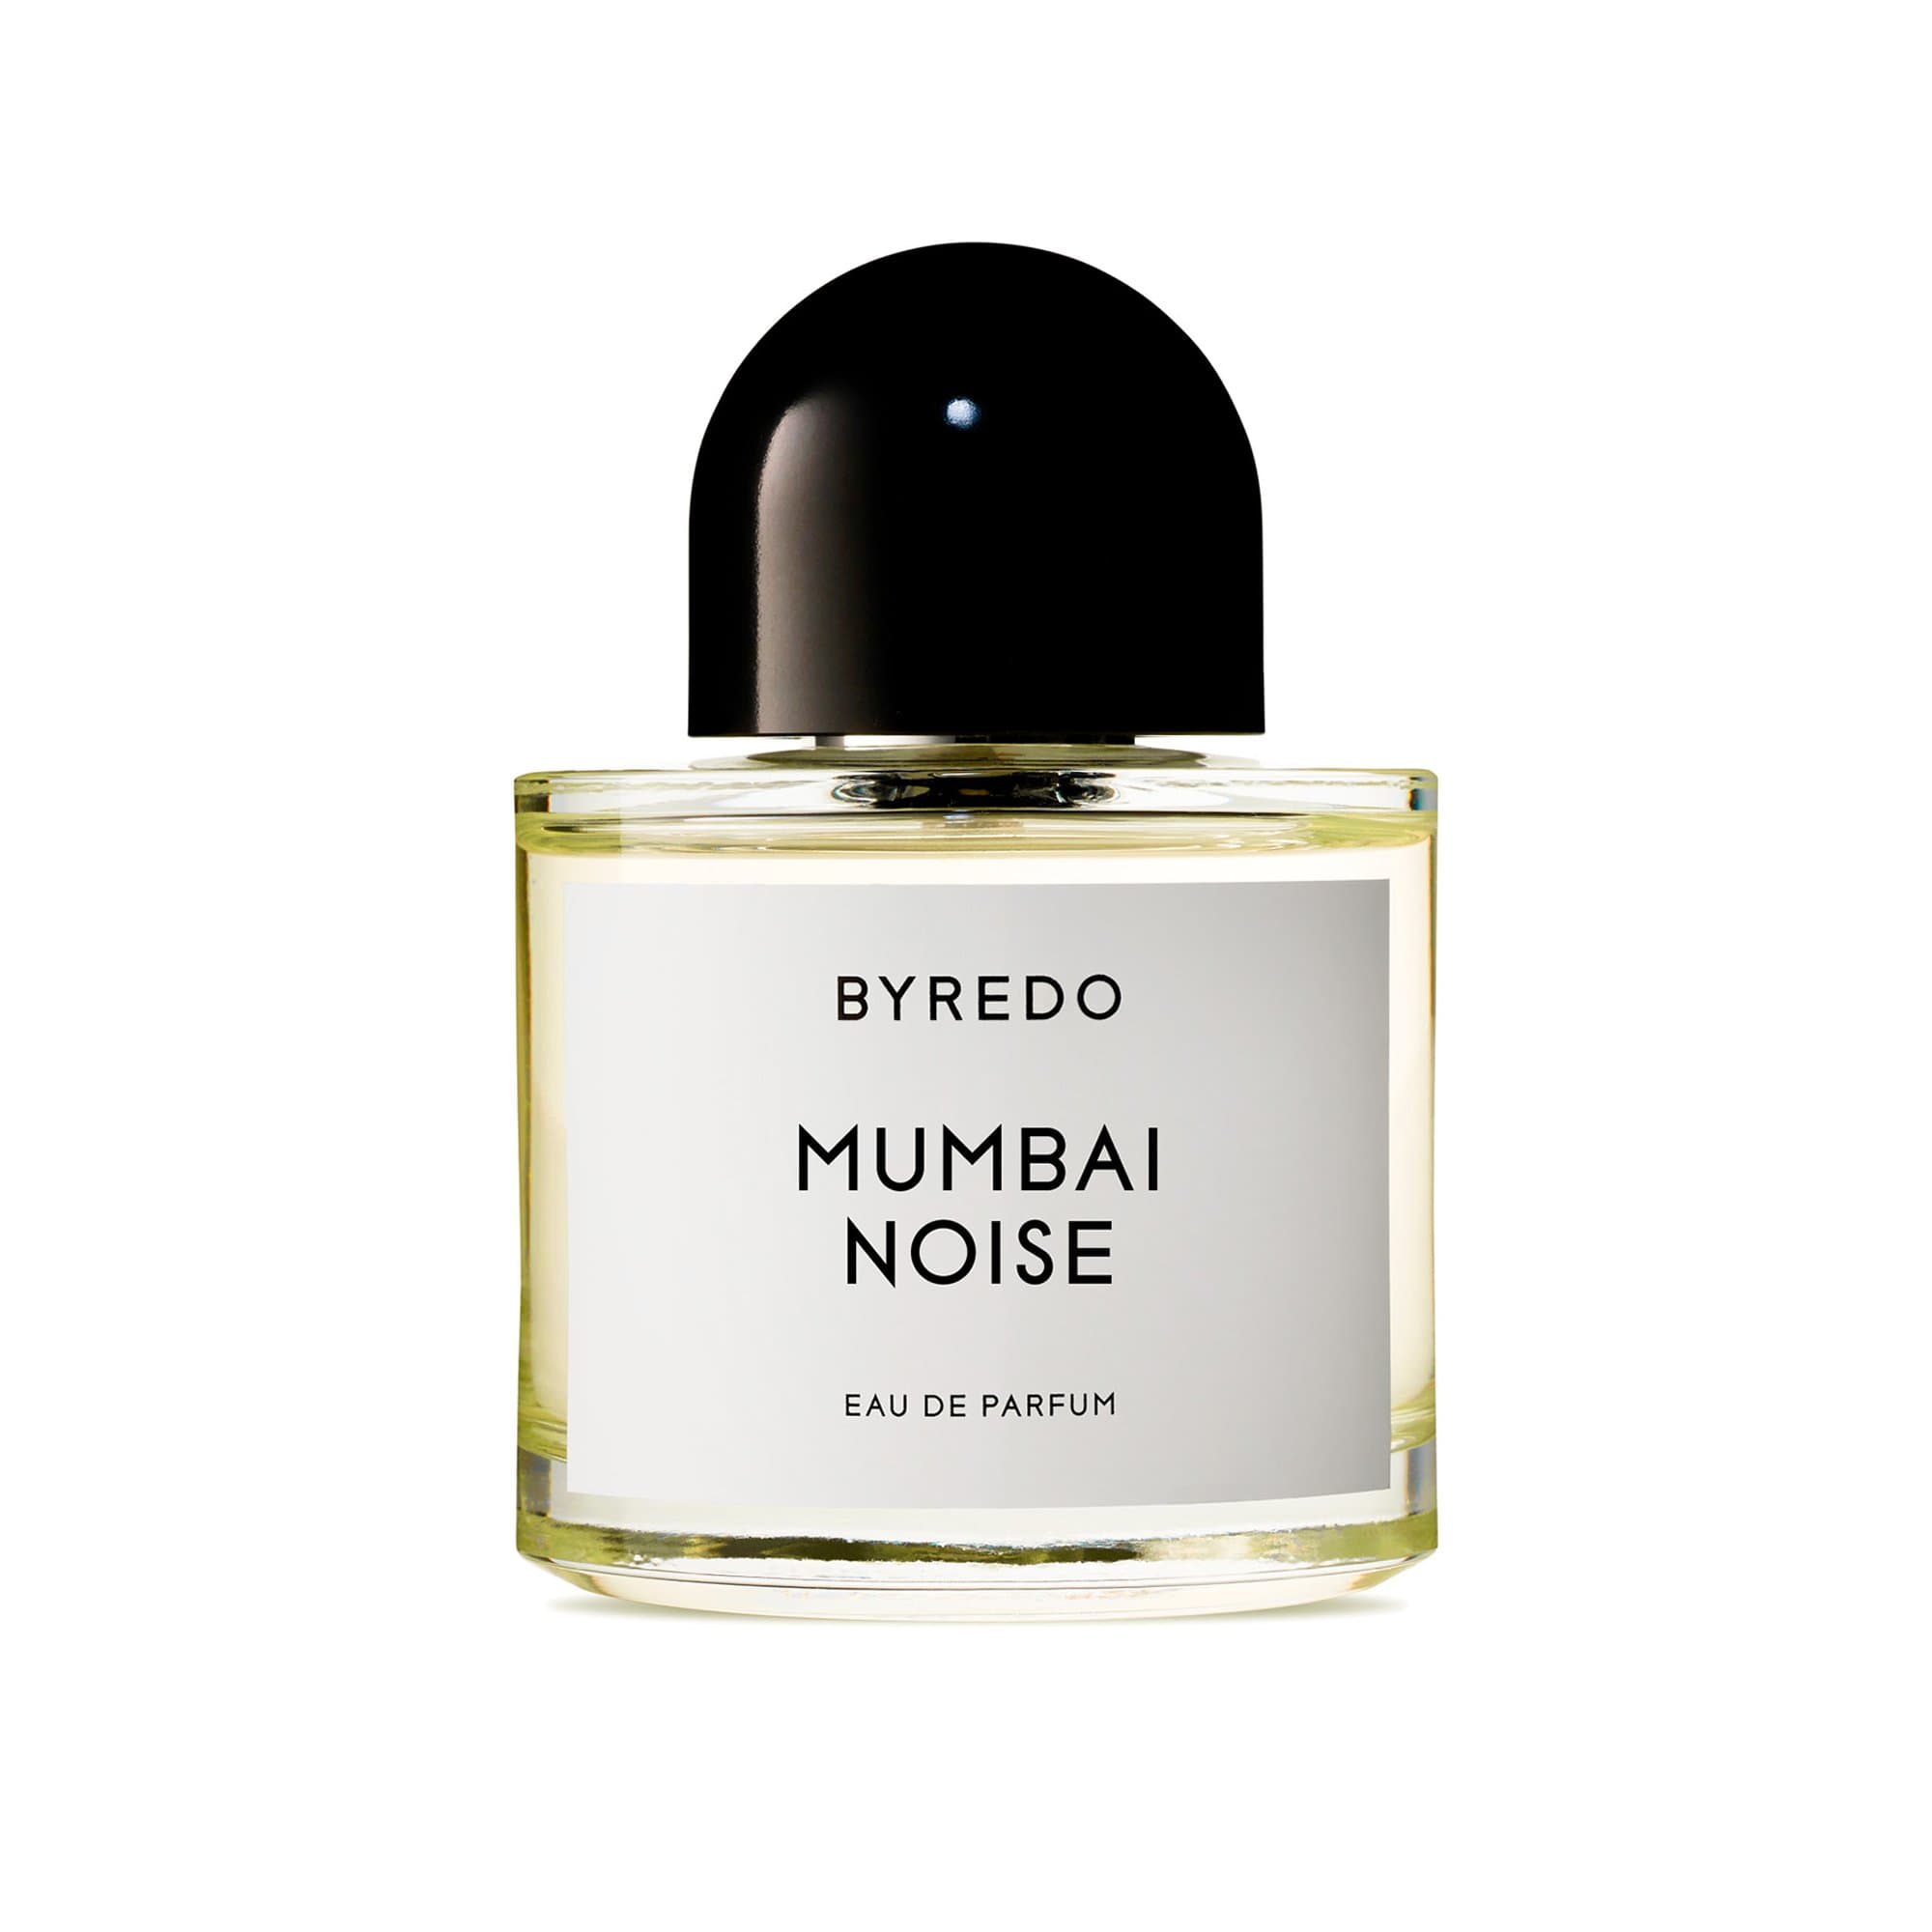 Mumbai Noise BYREDO Eau de Parfum